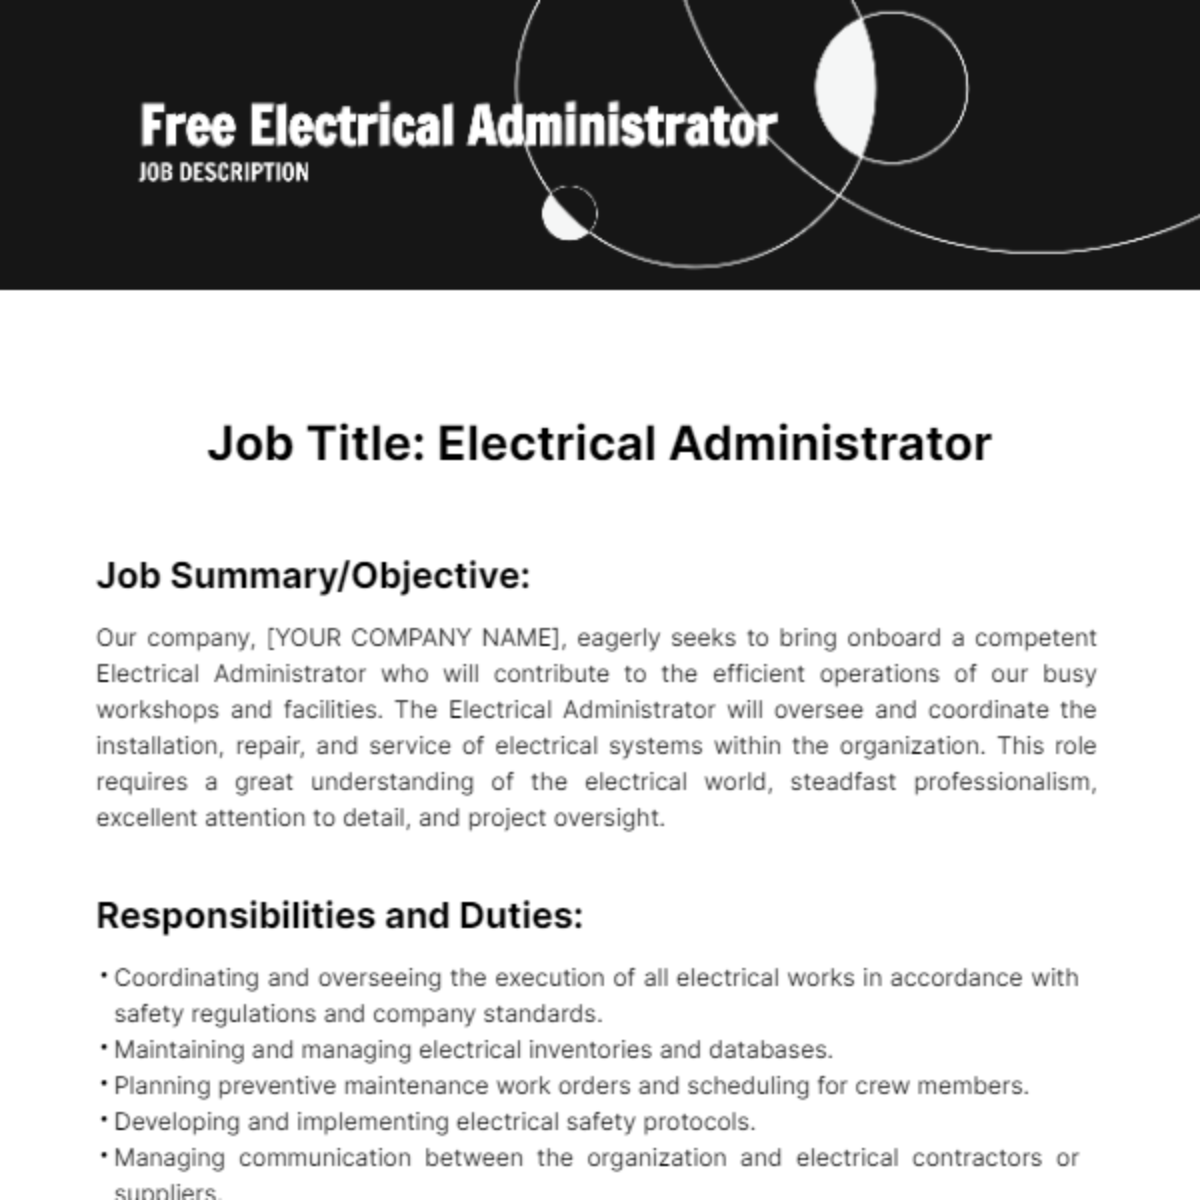 Free Electrical Administrator Job Description Template